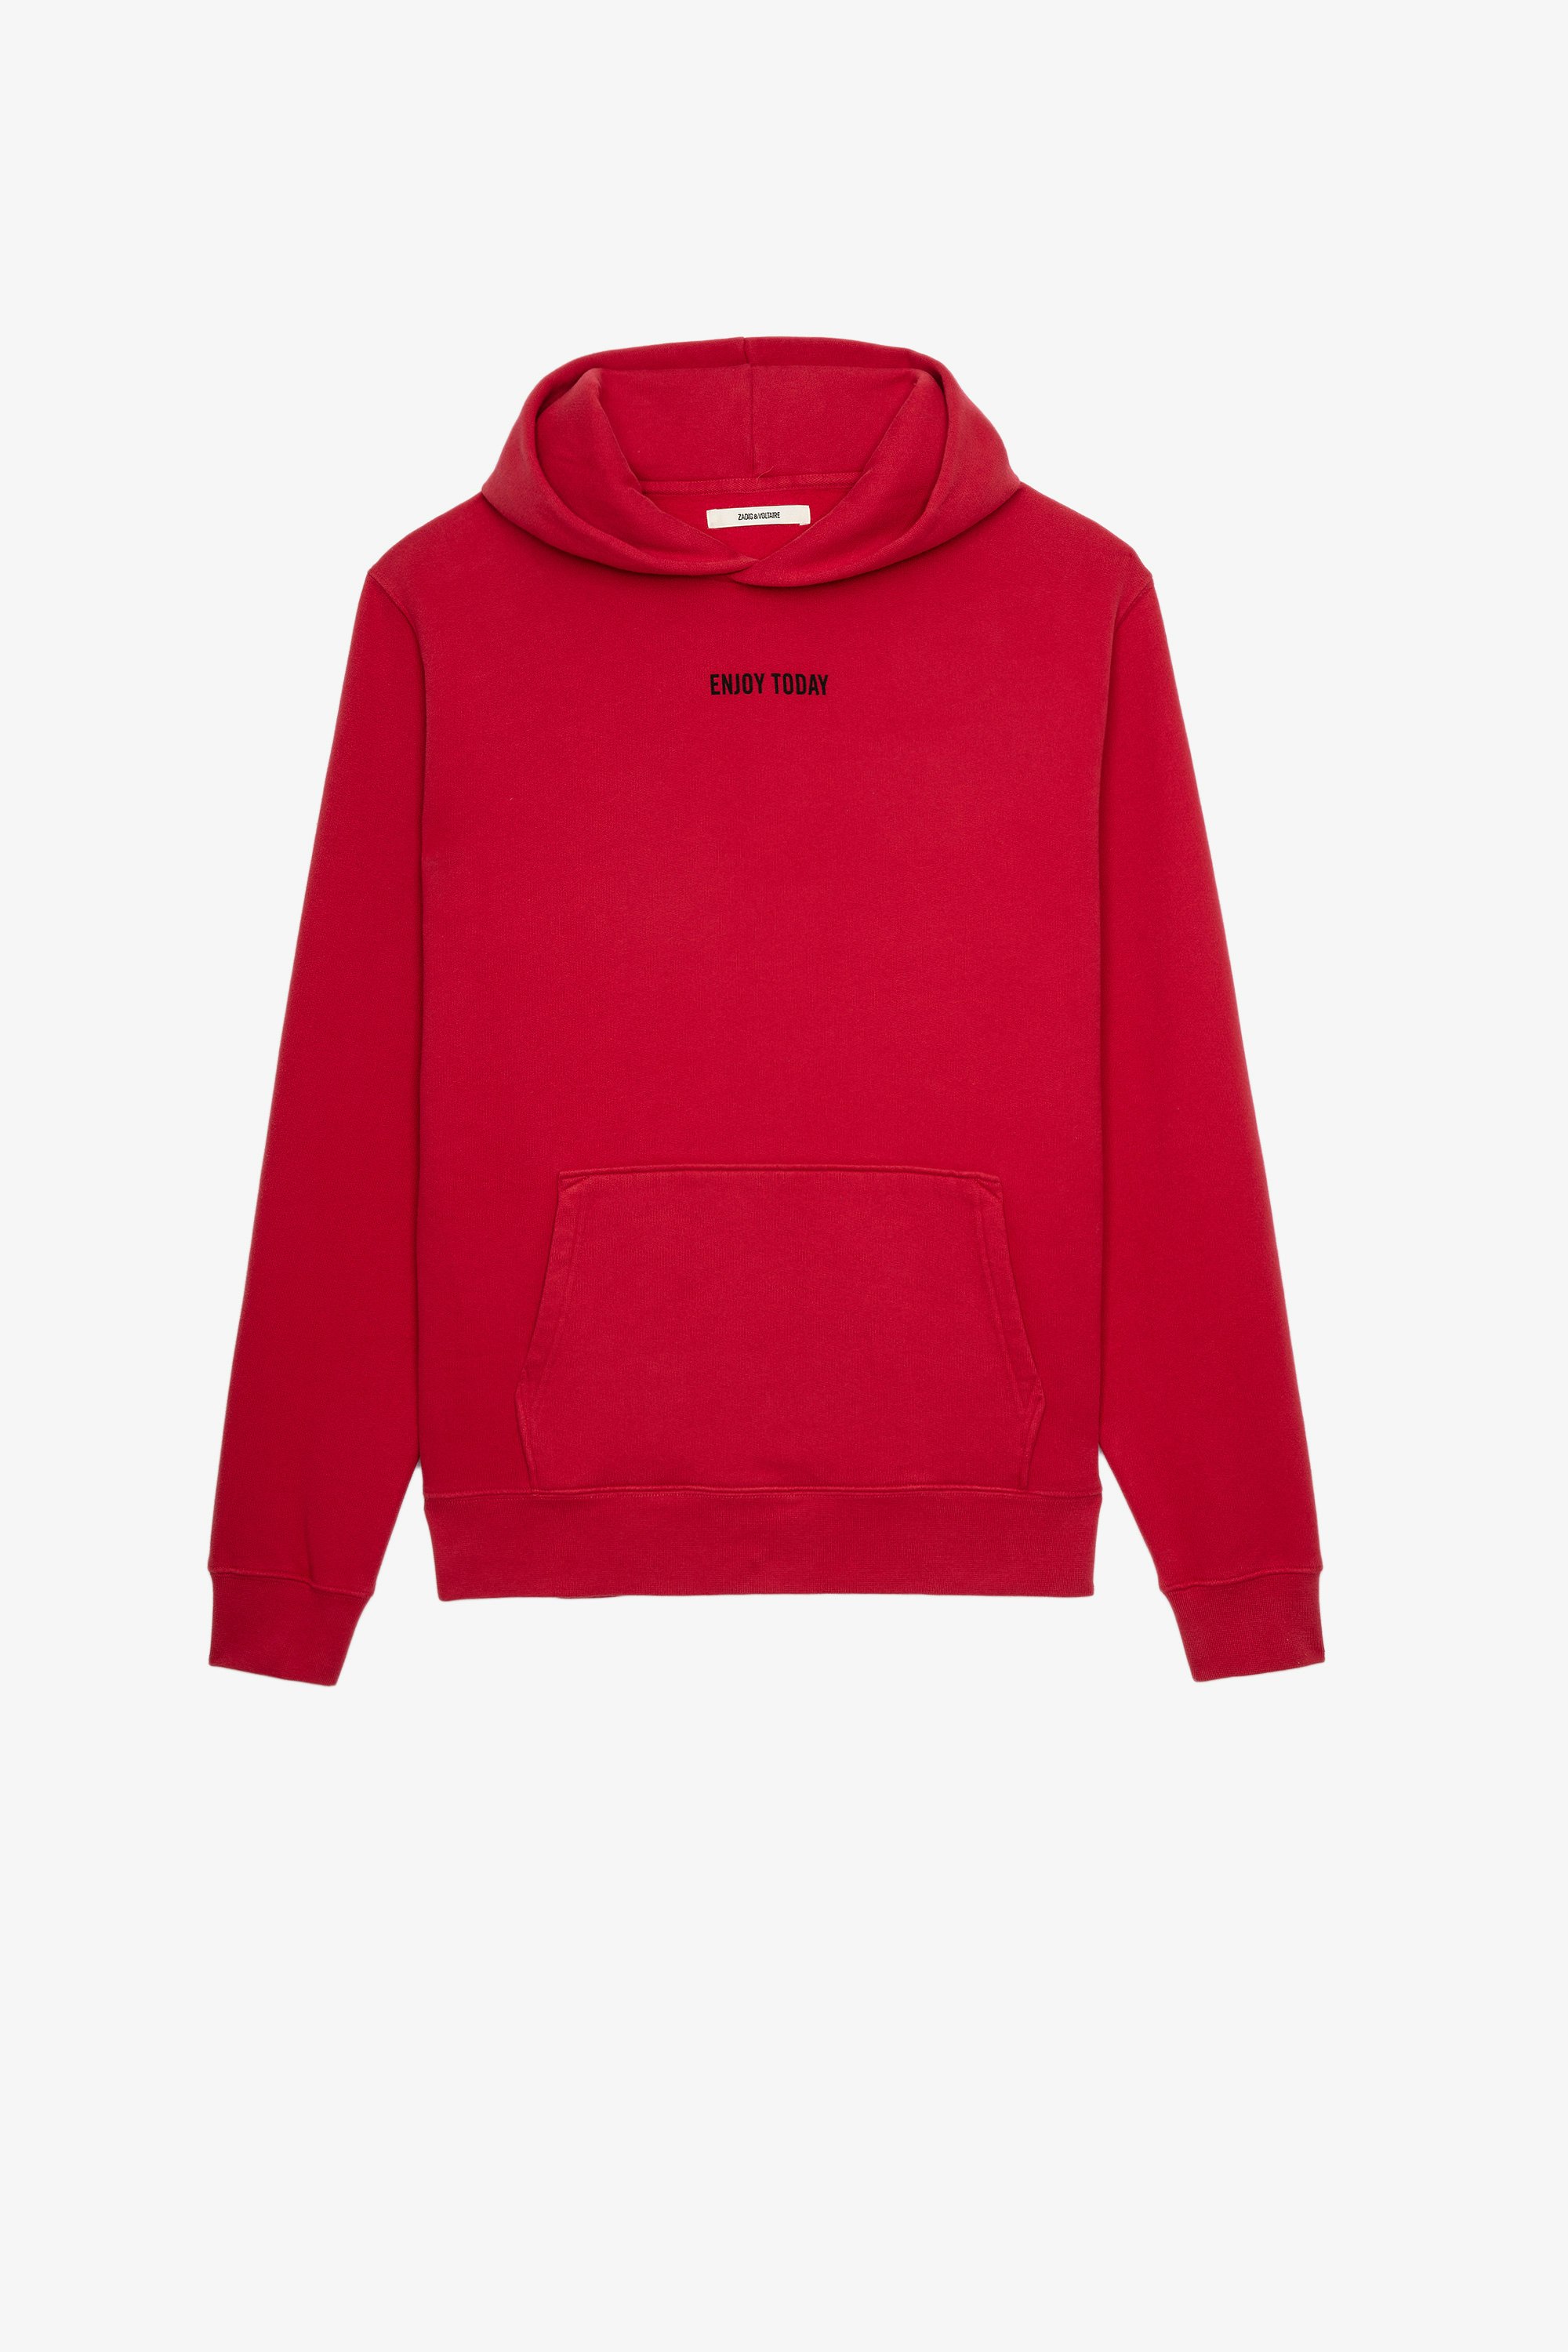 Sanchi Photoprint スウェット Men’s red cotton sweatshirt with photoprint on back